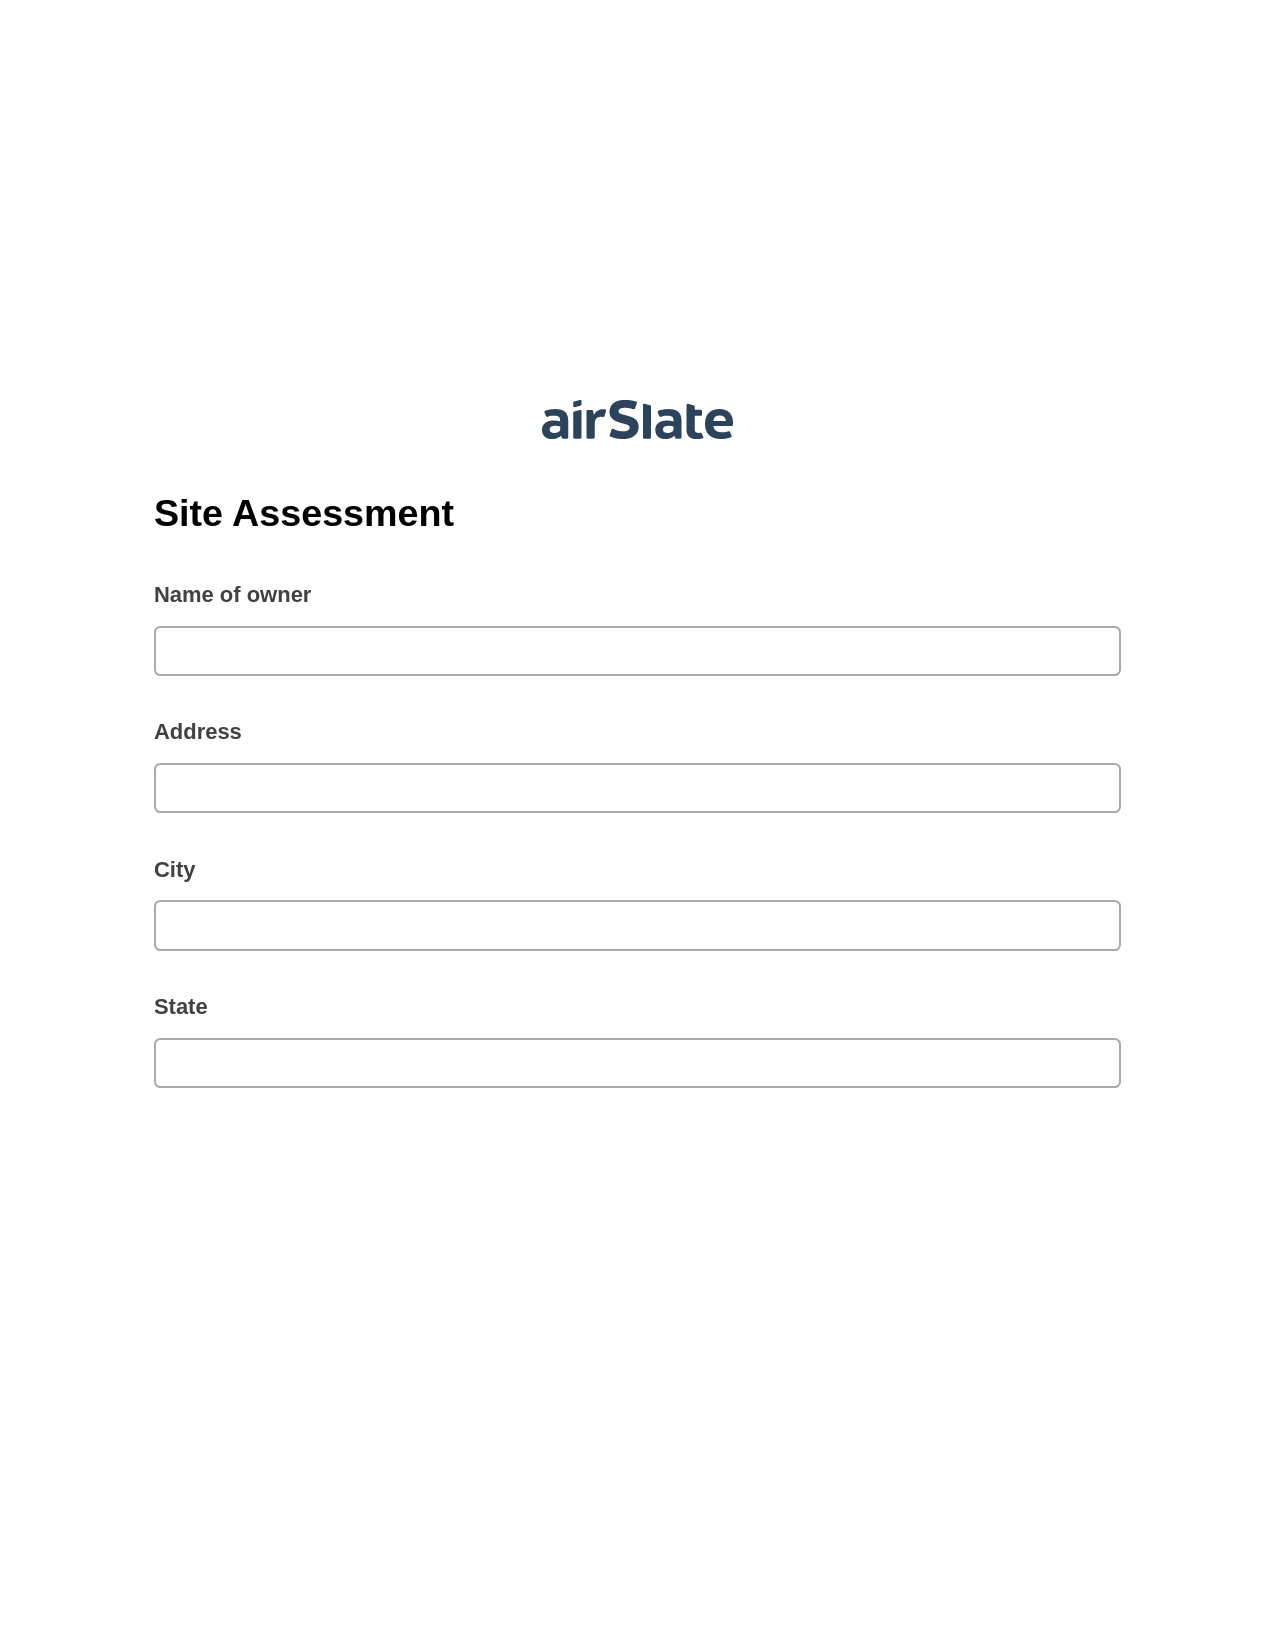 Multirole Site Assessment Pre-fill from Excel Spreadsheet Bot, Google Cloud Print Bot, Archive to SharePoint Folder Bot